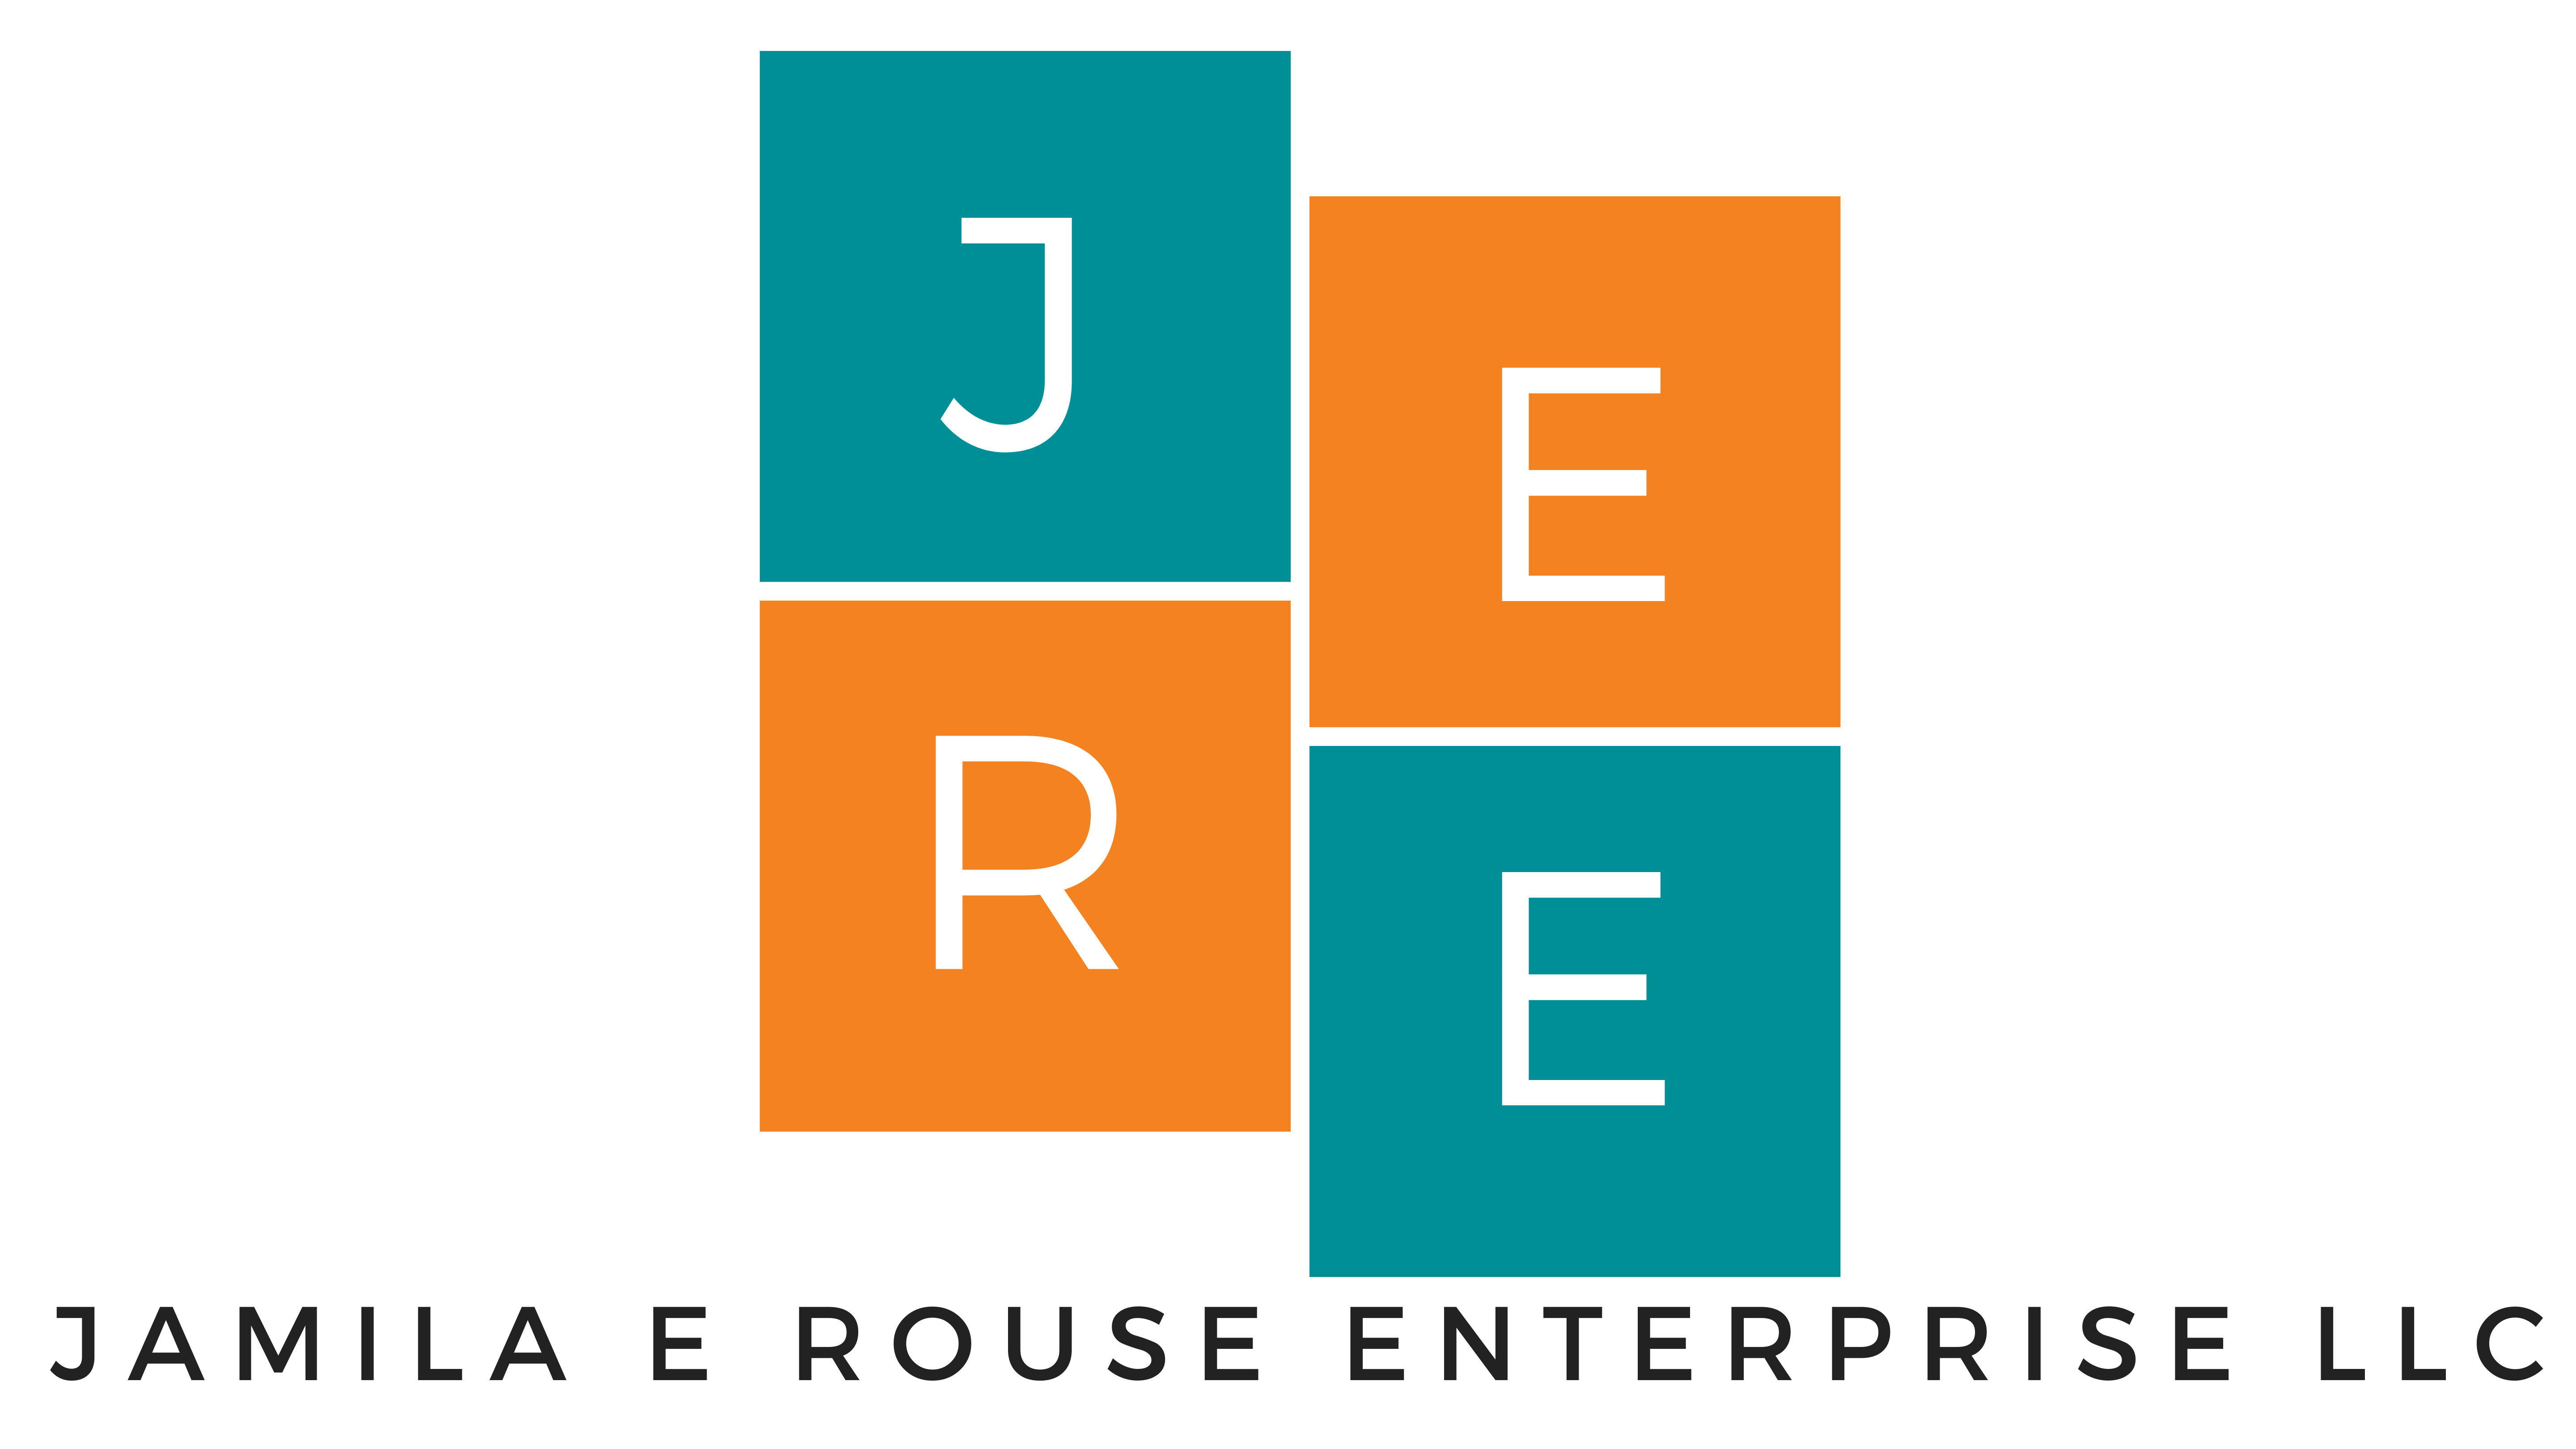 Jamila E Rouse Enterprise LLC